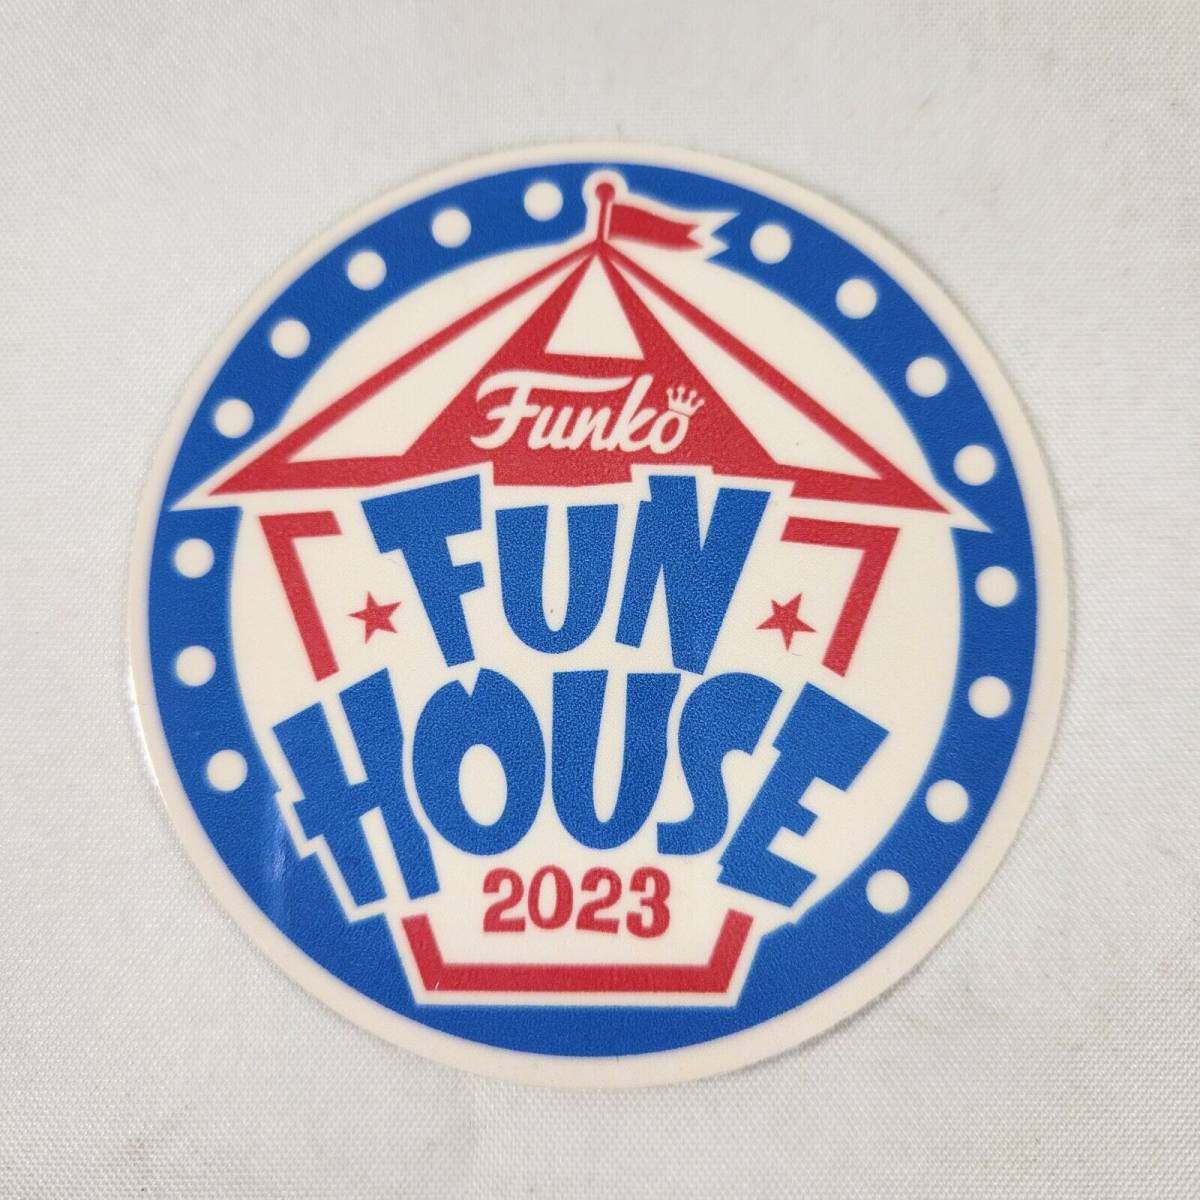 Funko Fun House 2023 WonderCon Sticker 海外 即決